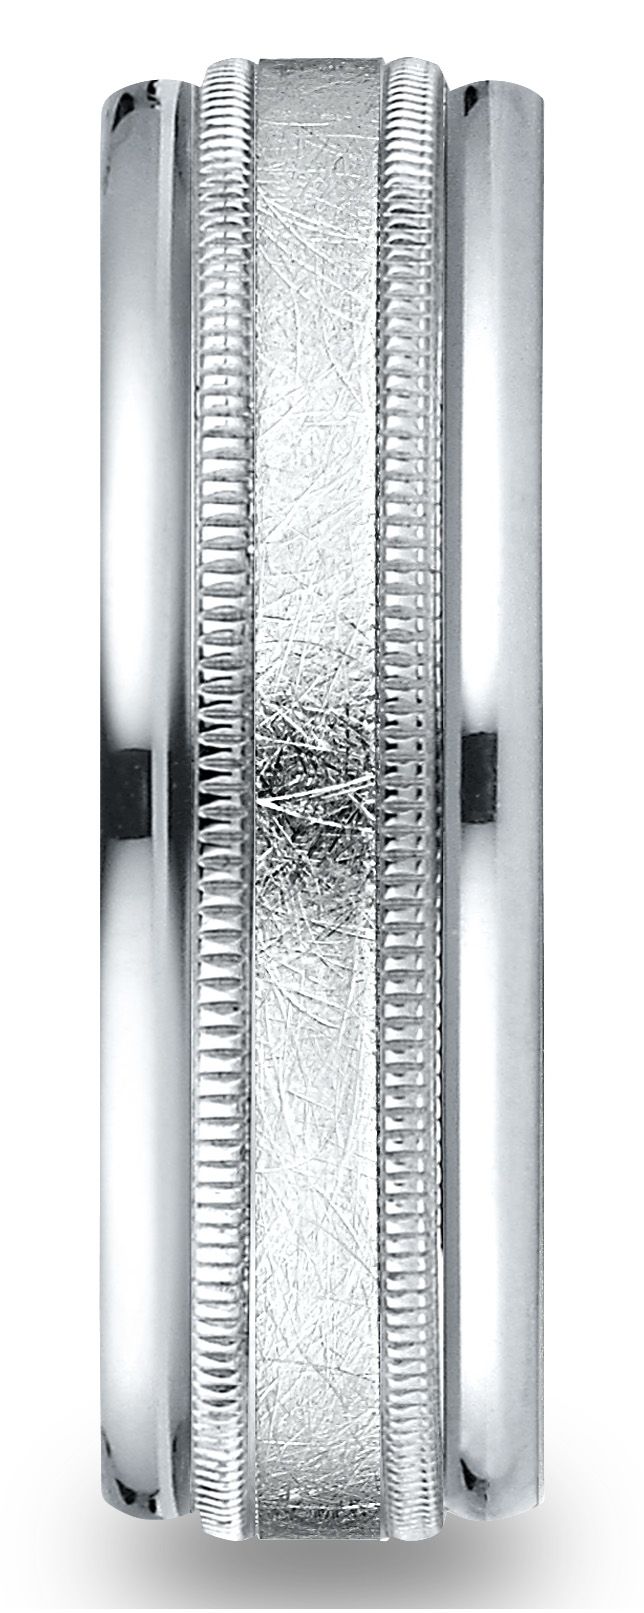 Platinum 7mm Comfort-fit Swirl Finish Center Milgrain Round Edge Carved Design Band